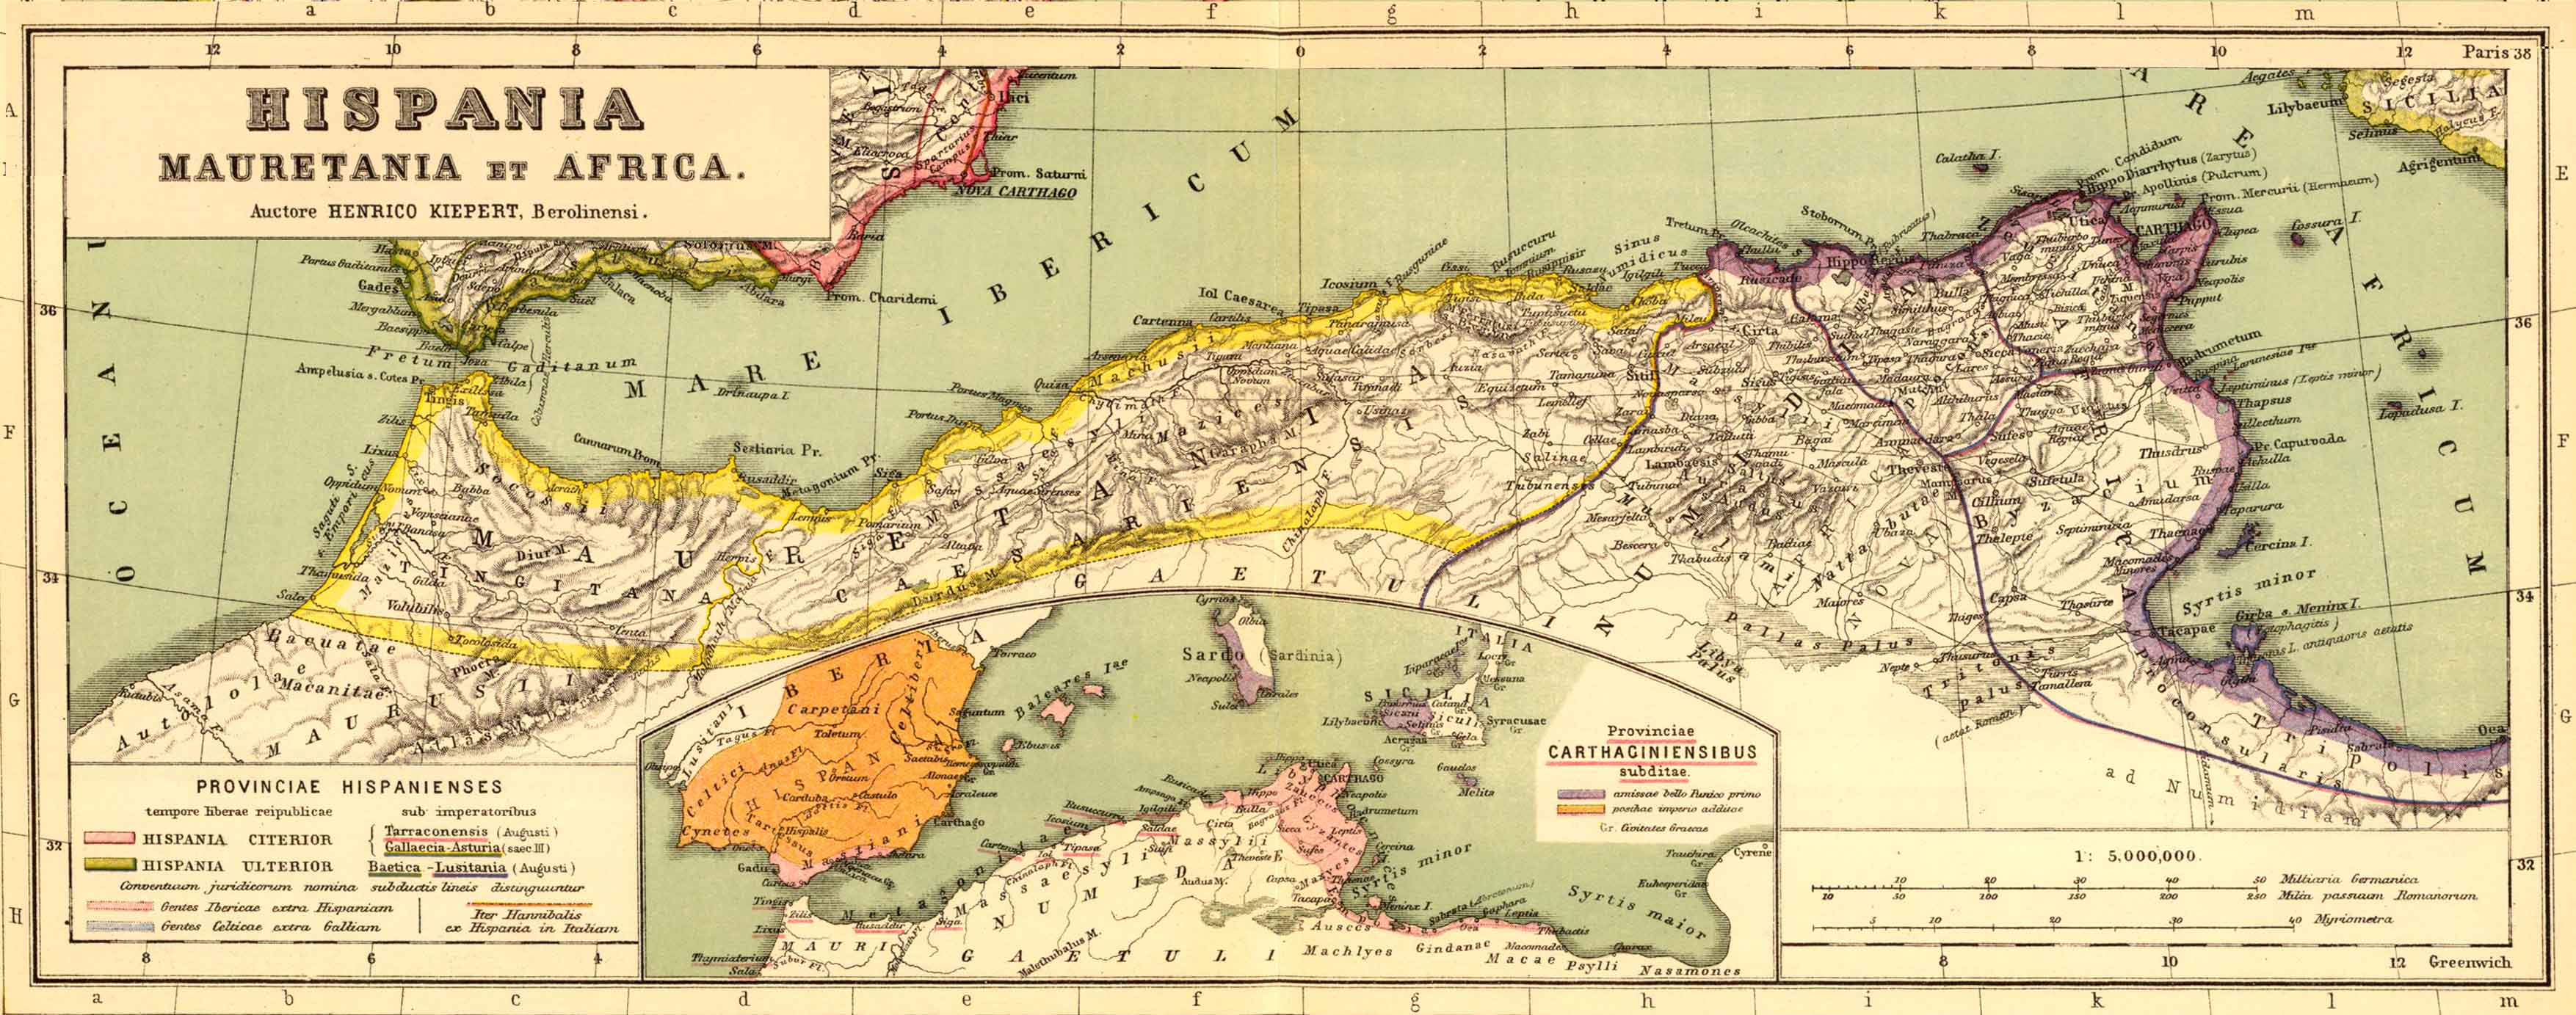 Detalle de un mapa de las provincias romanas de Mauritania Tingitana, Mauritania Cesariense y parte de Numidia. Imagen: H.Kiepert, Atlas antiquus (DP).